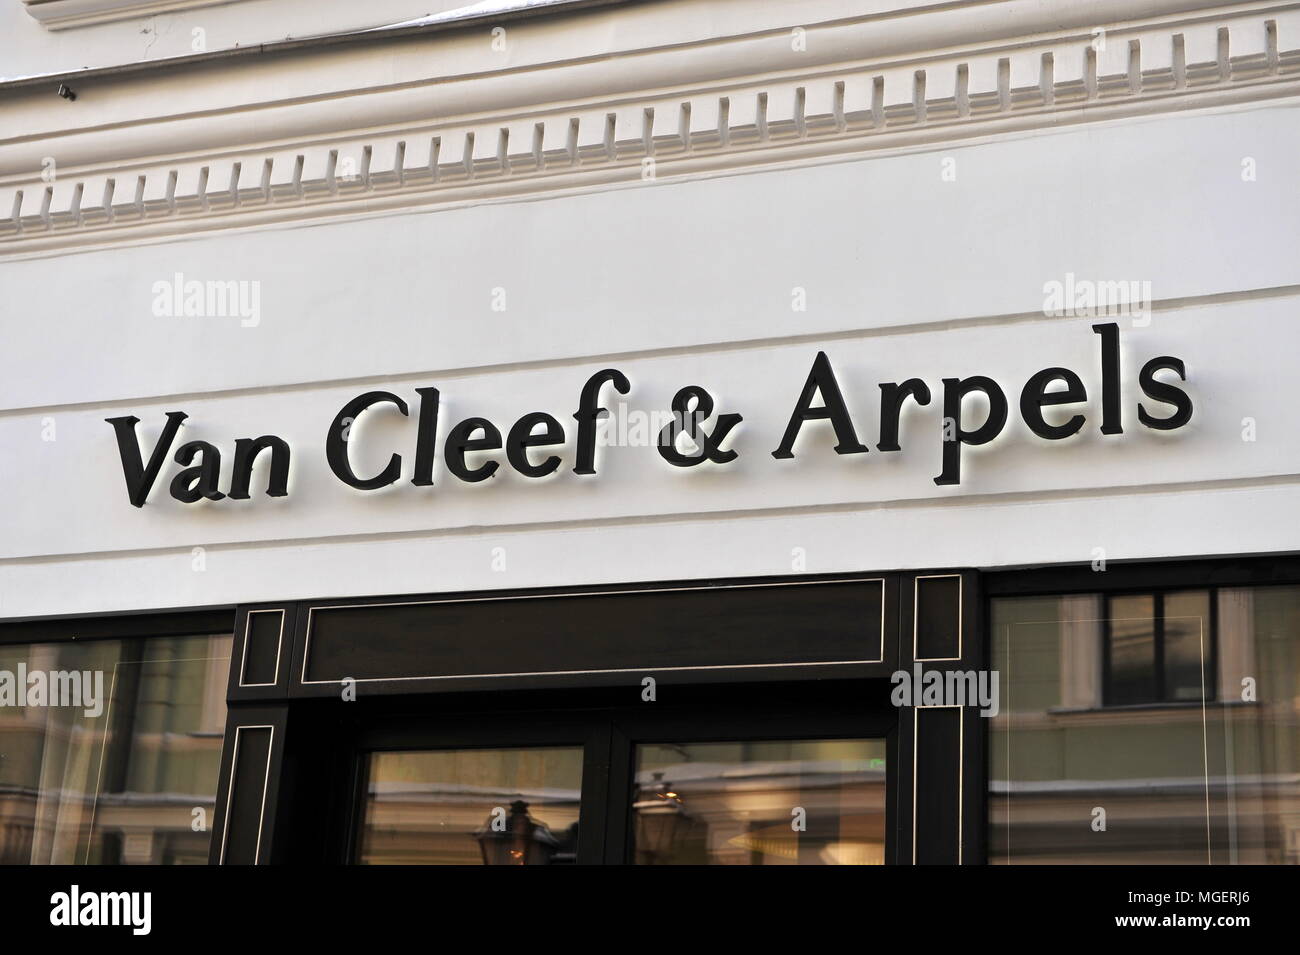 Van-Cleef-&-Arpels-logo